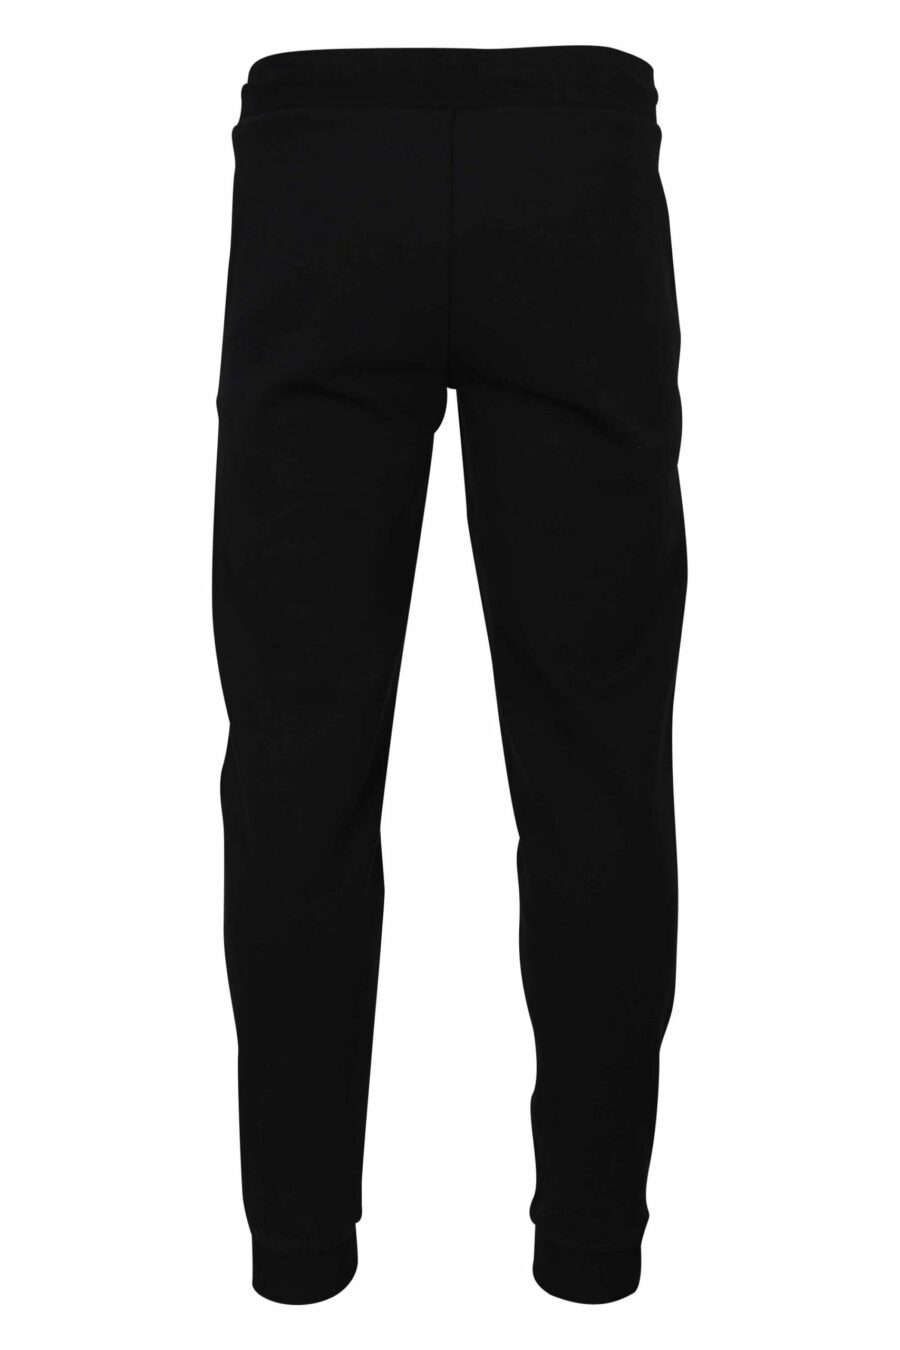 Pantalón de chándal negro con minilogo "lux identity" blanco en placa negra - 8057970666158 1 scaled